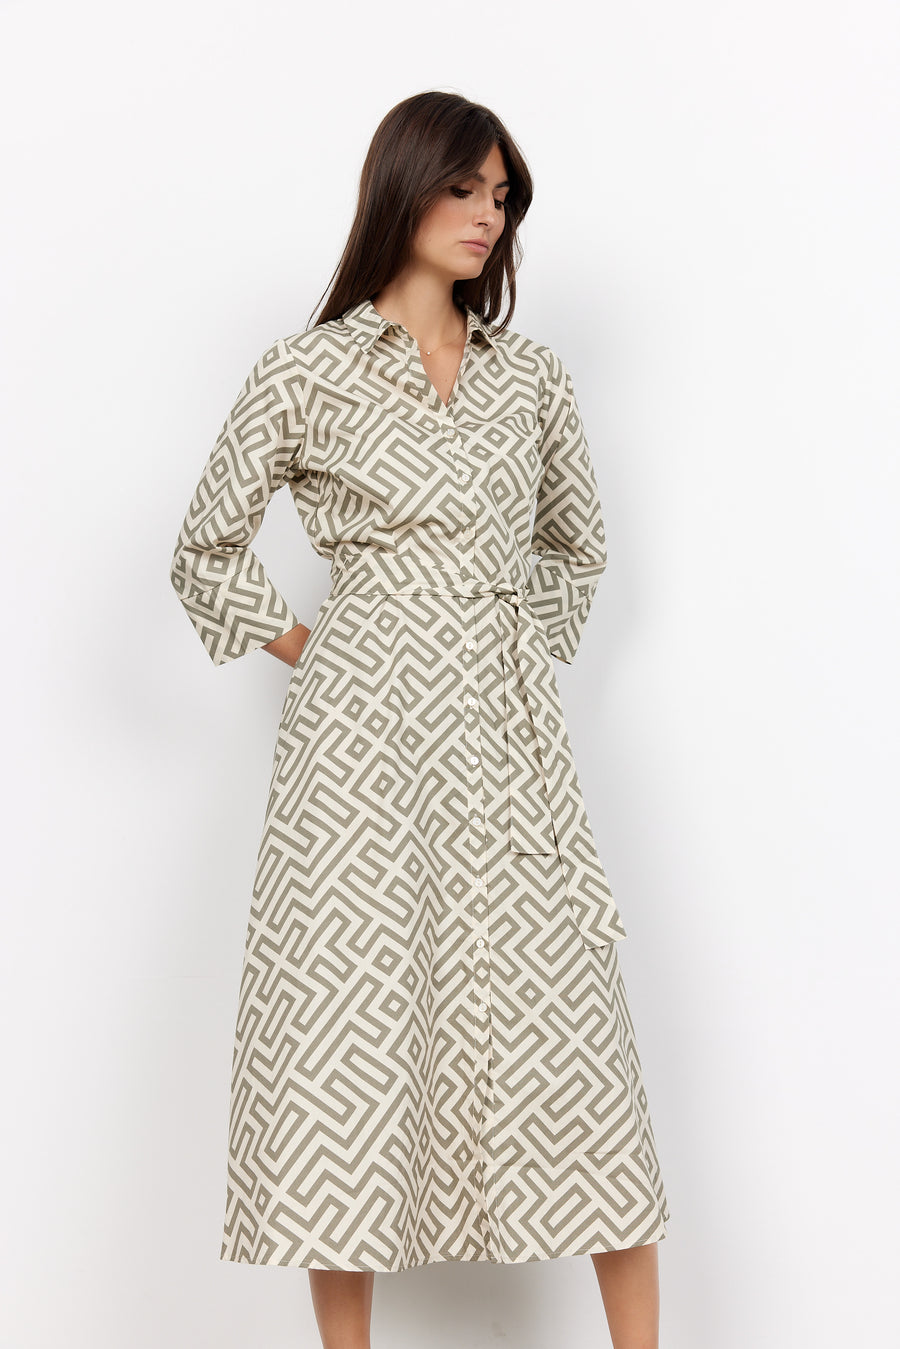 Soya Concept - Kirsty Dress -40% at Checkout